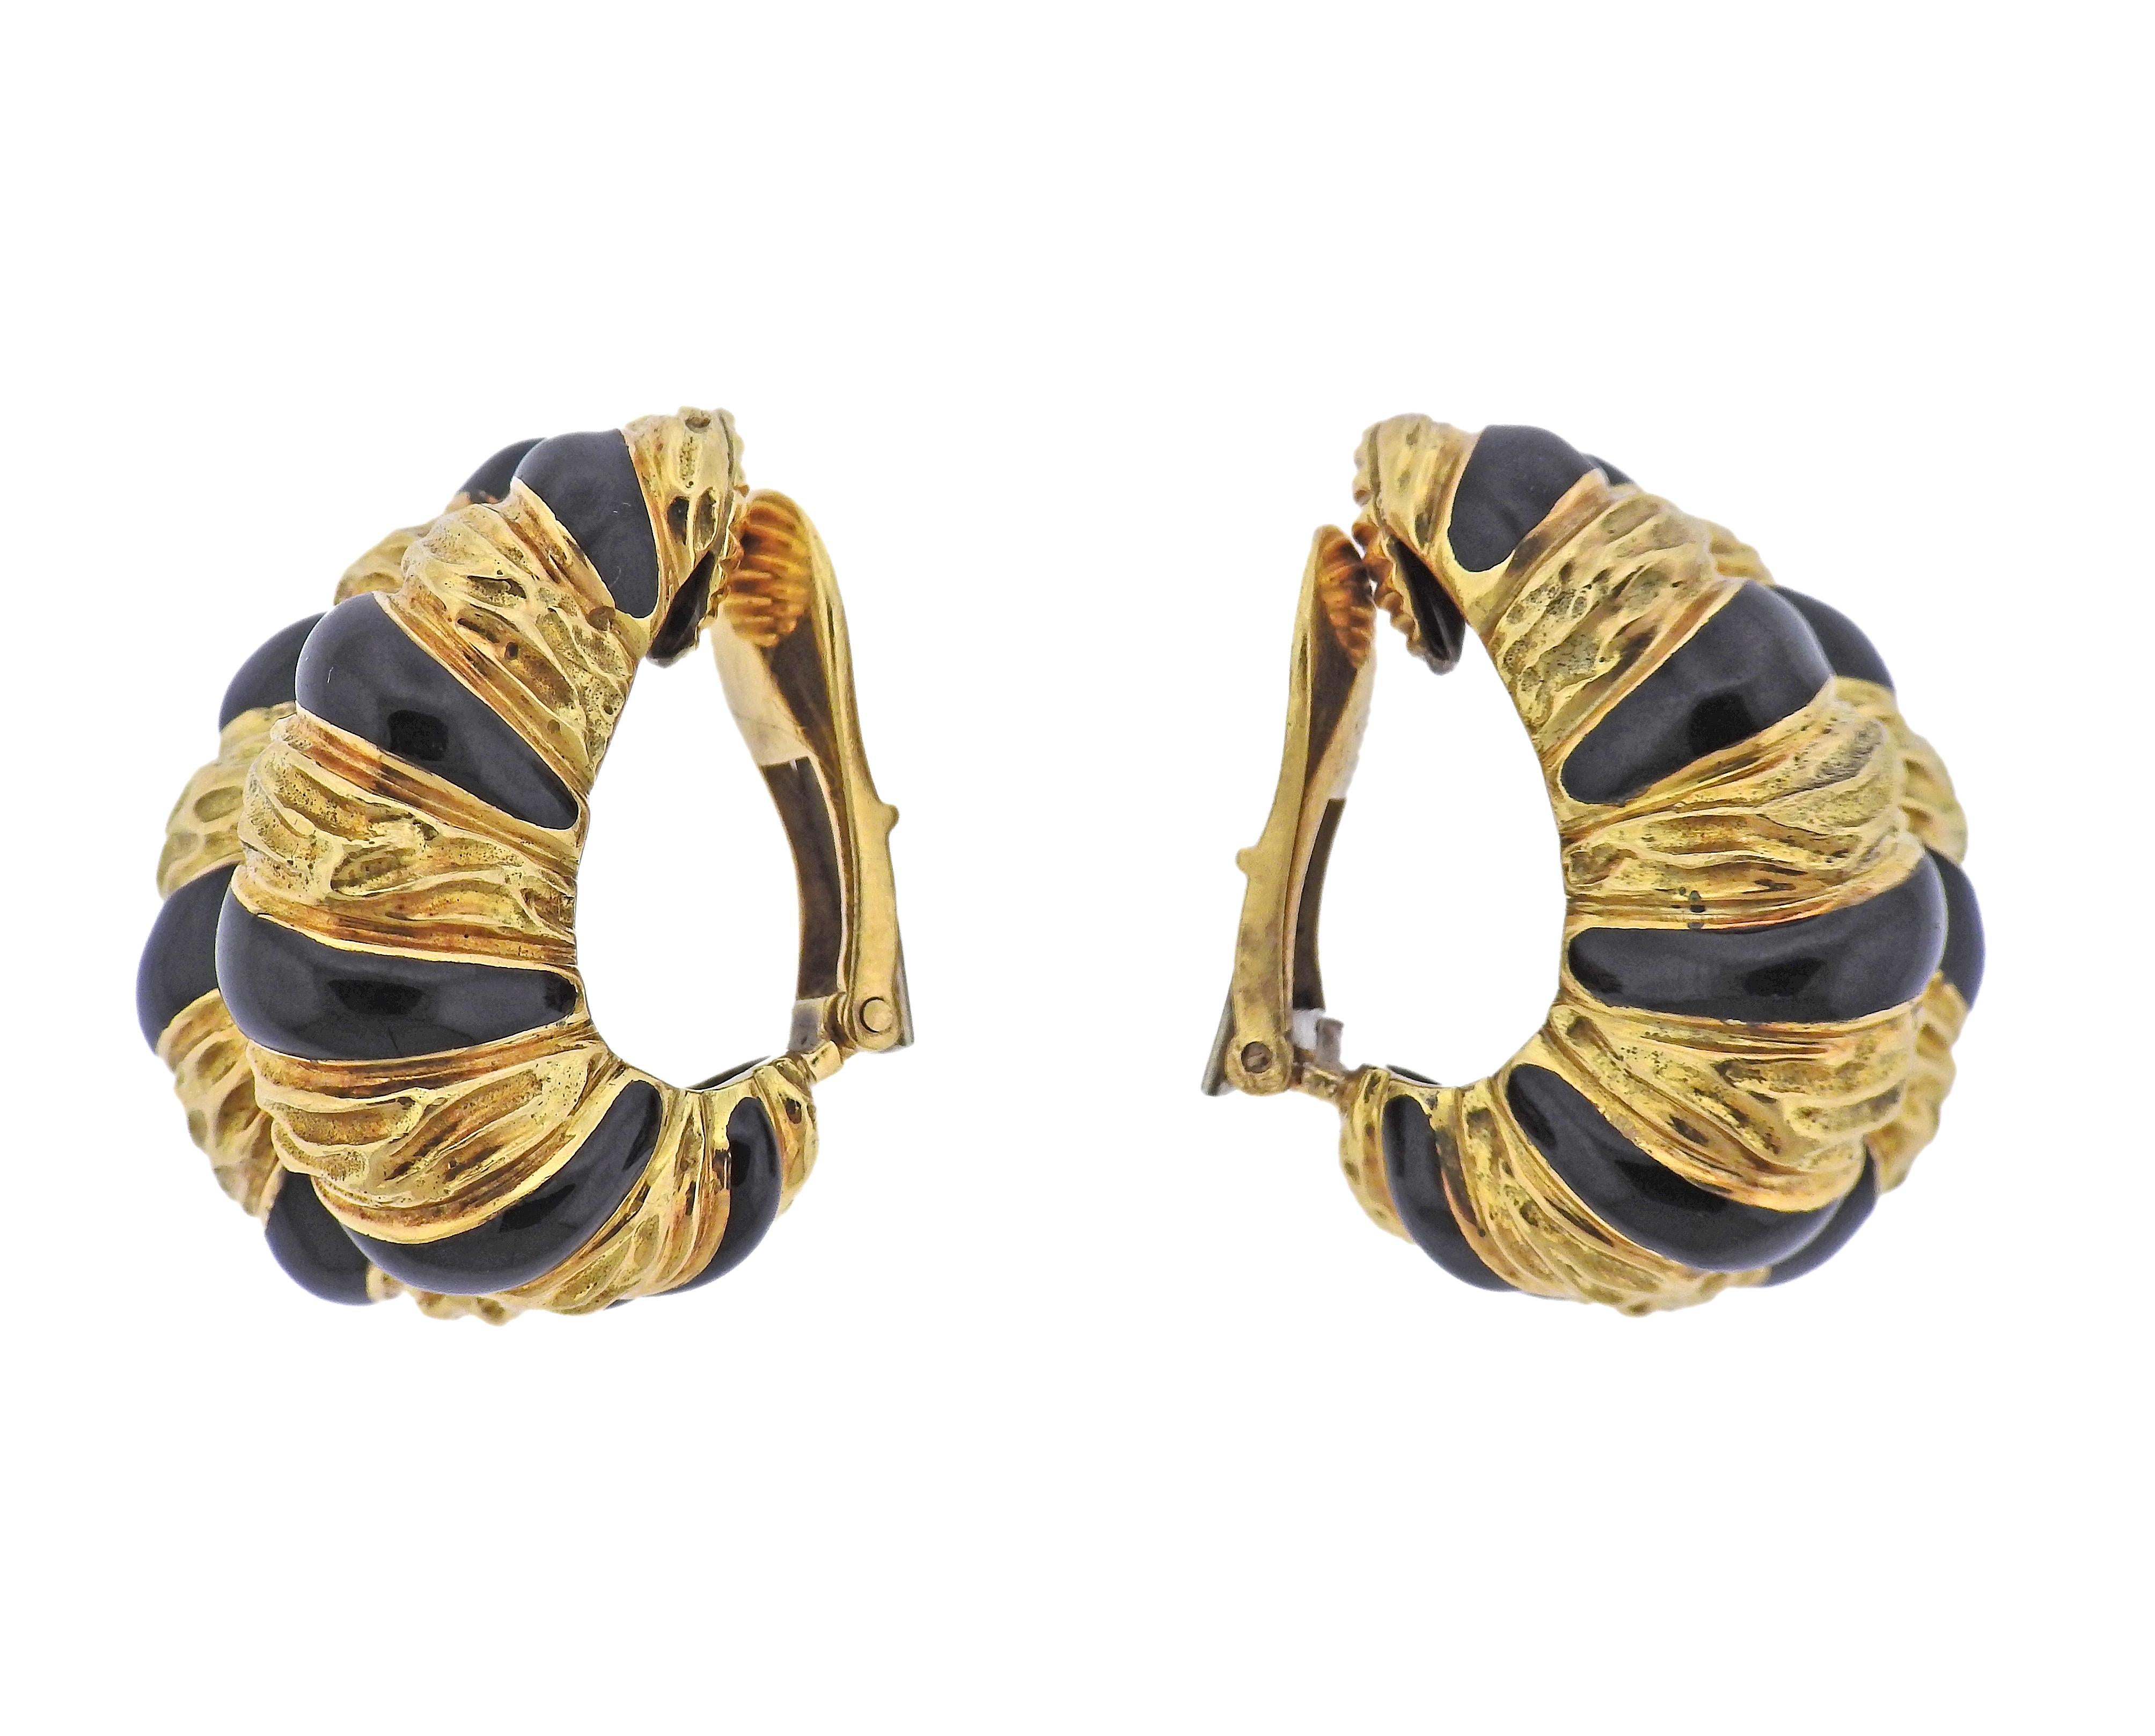 Pair of 18k gold half hop earrings by David Webb, adorned with black enamel. Earrings measure 28mm x 16mm. Marked: 18k Webb. Weight - 31.5 grams. 